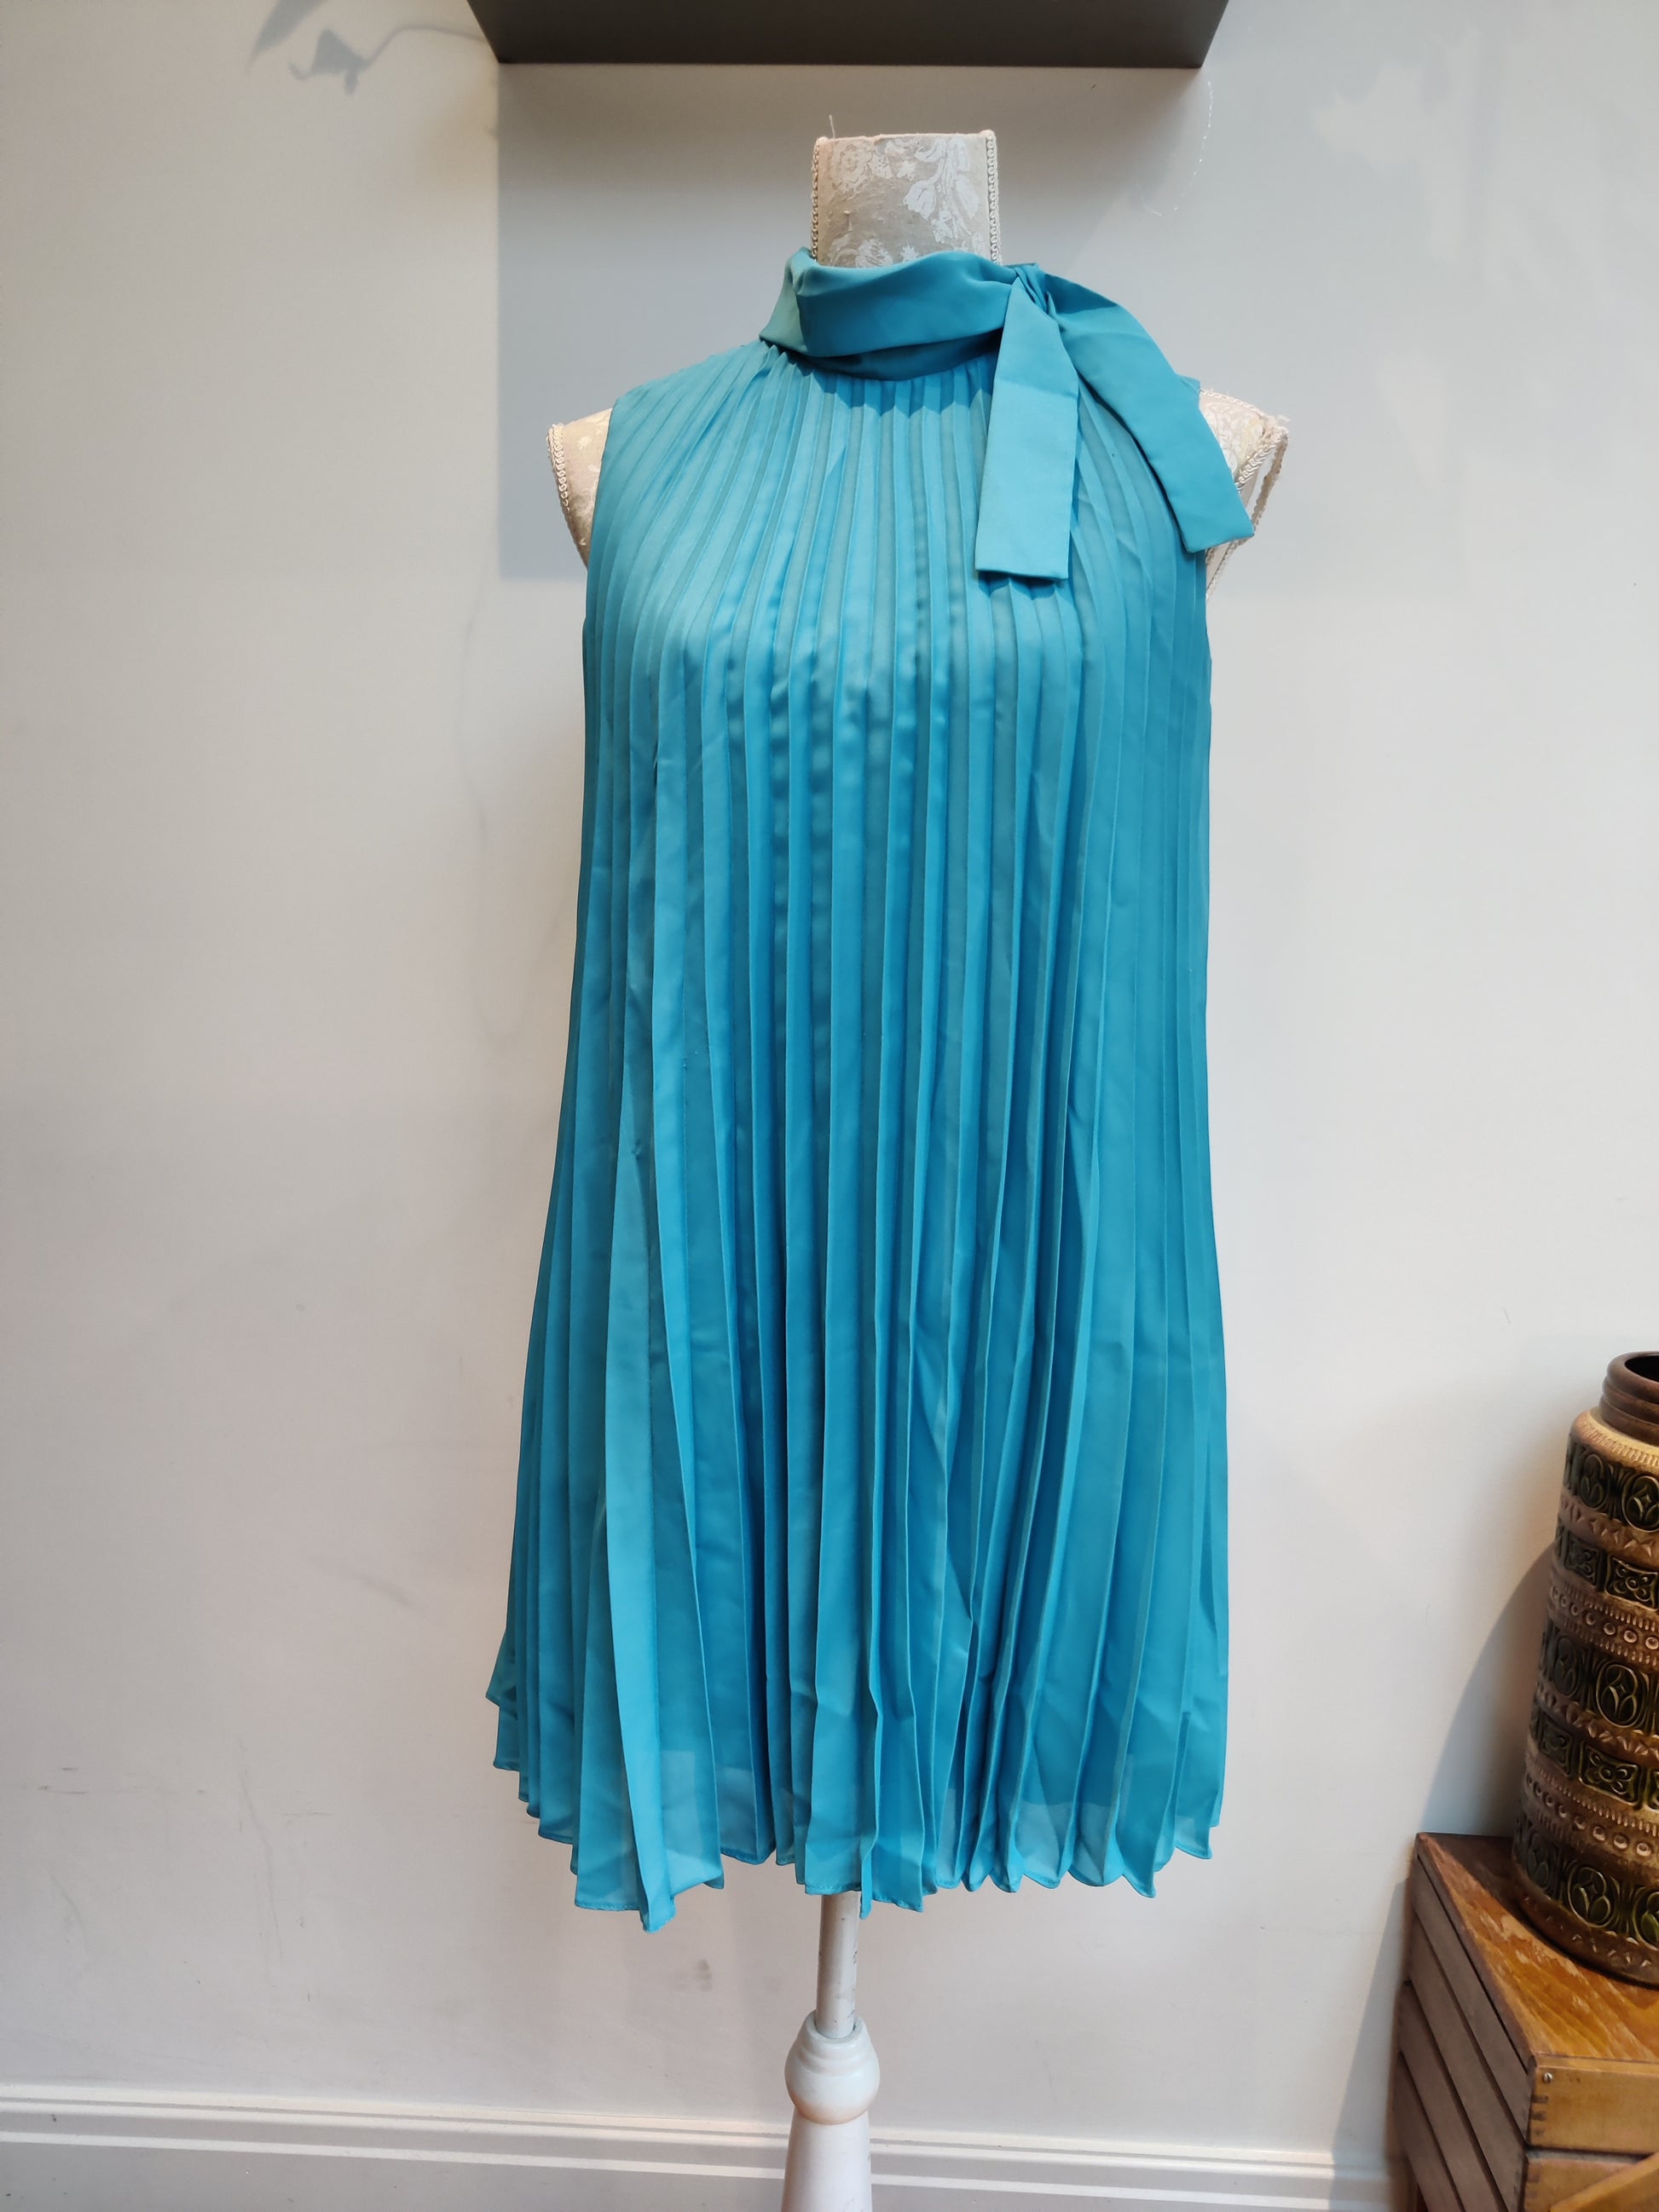 Blue pleated modette dress size 10-12